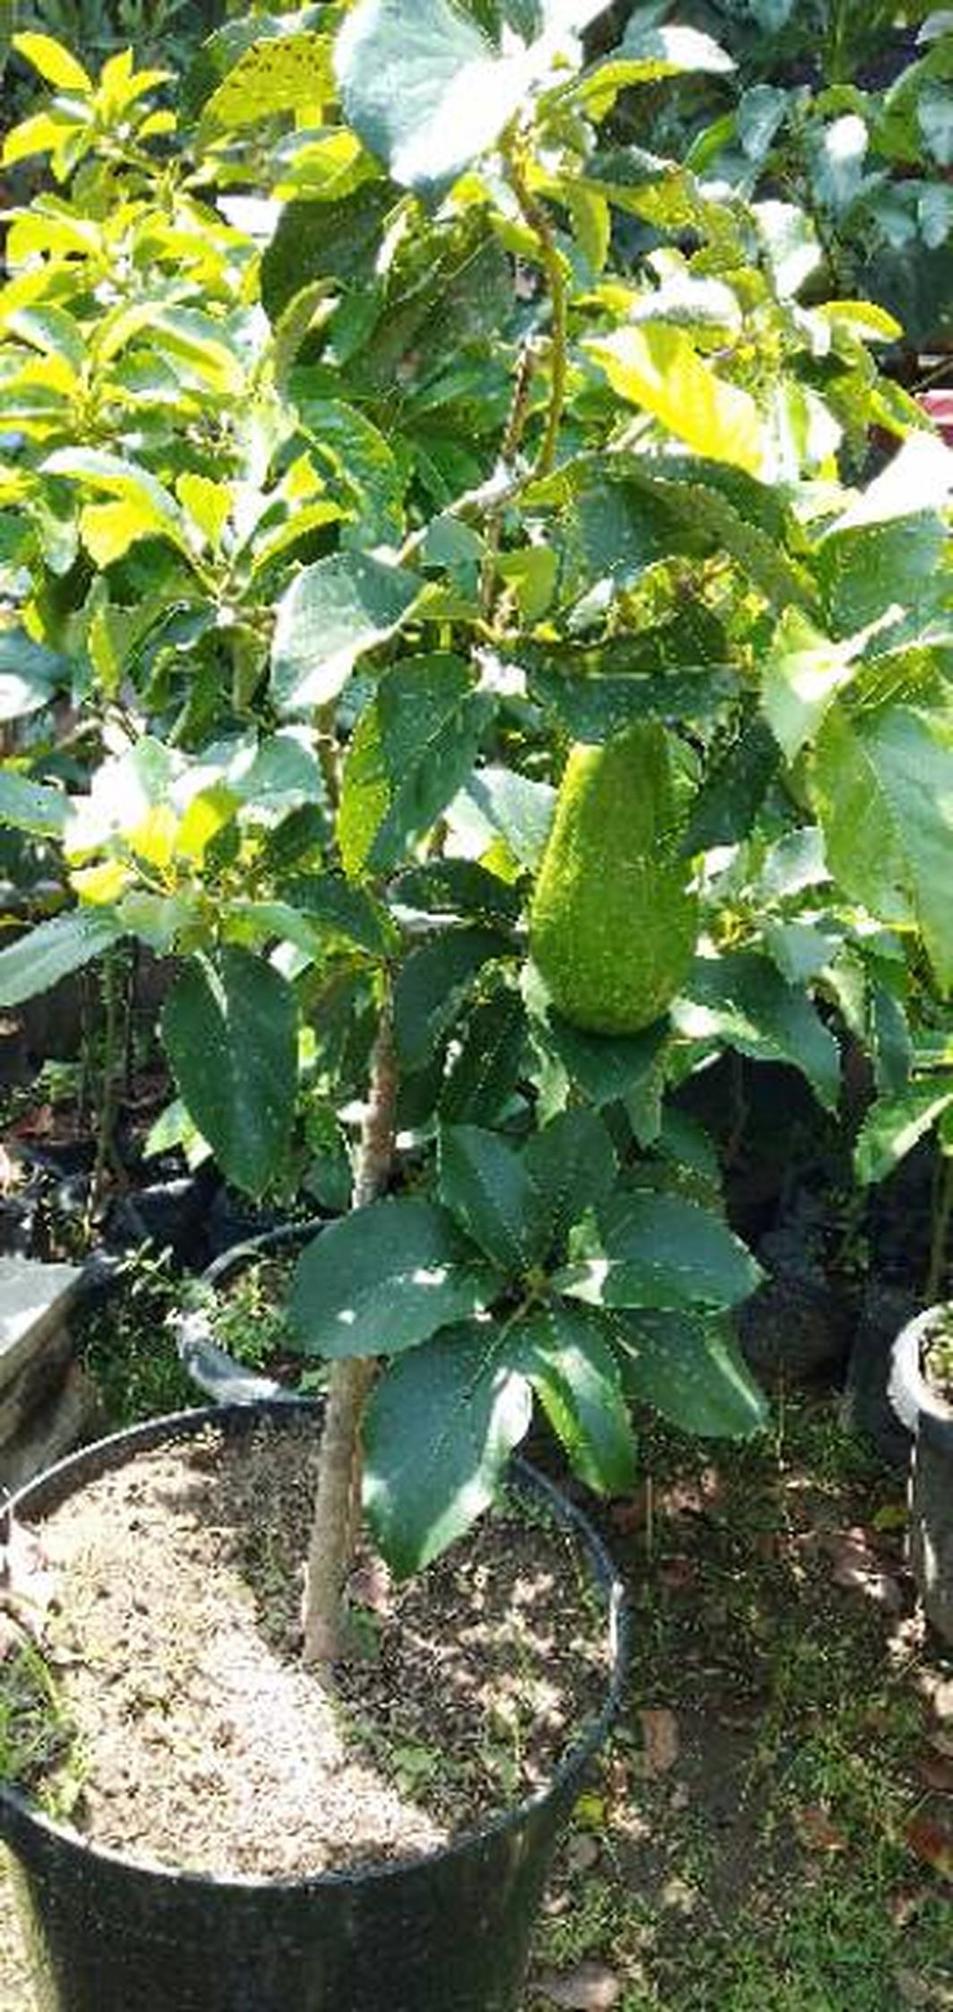 Gambar Produk tanaman alpukat markus kendil Bengkulu Selatan